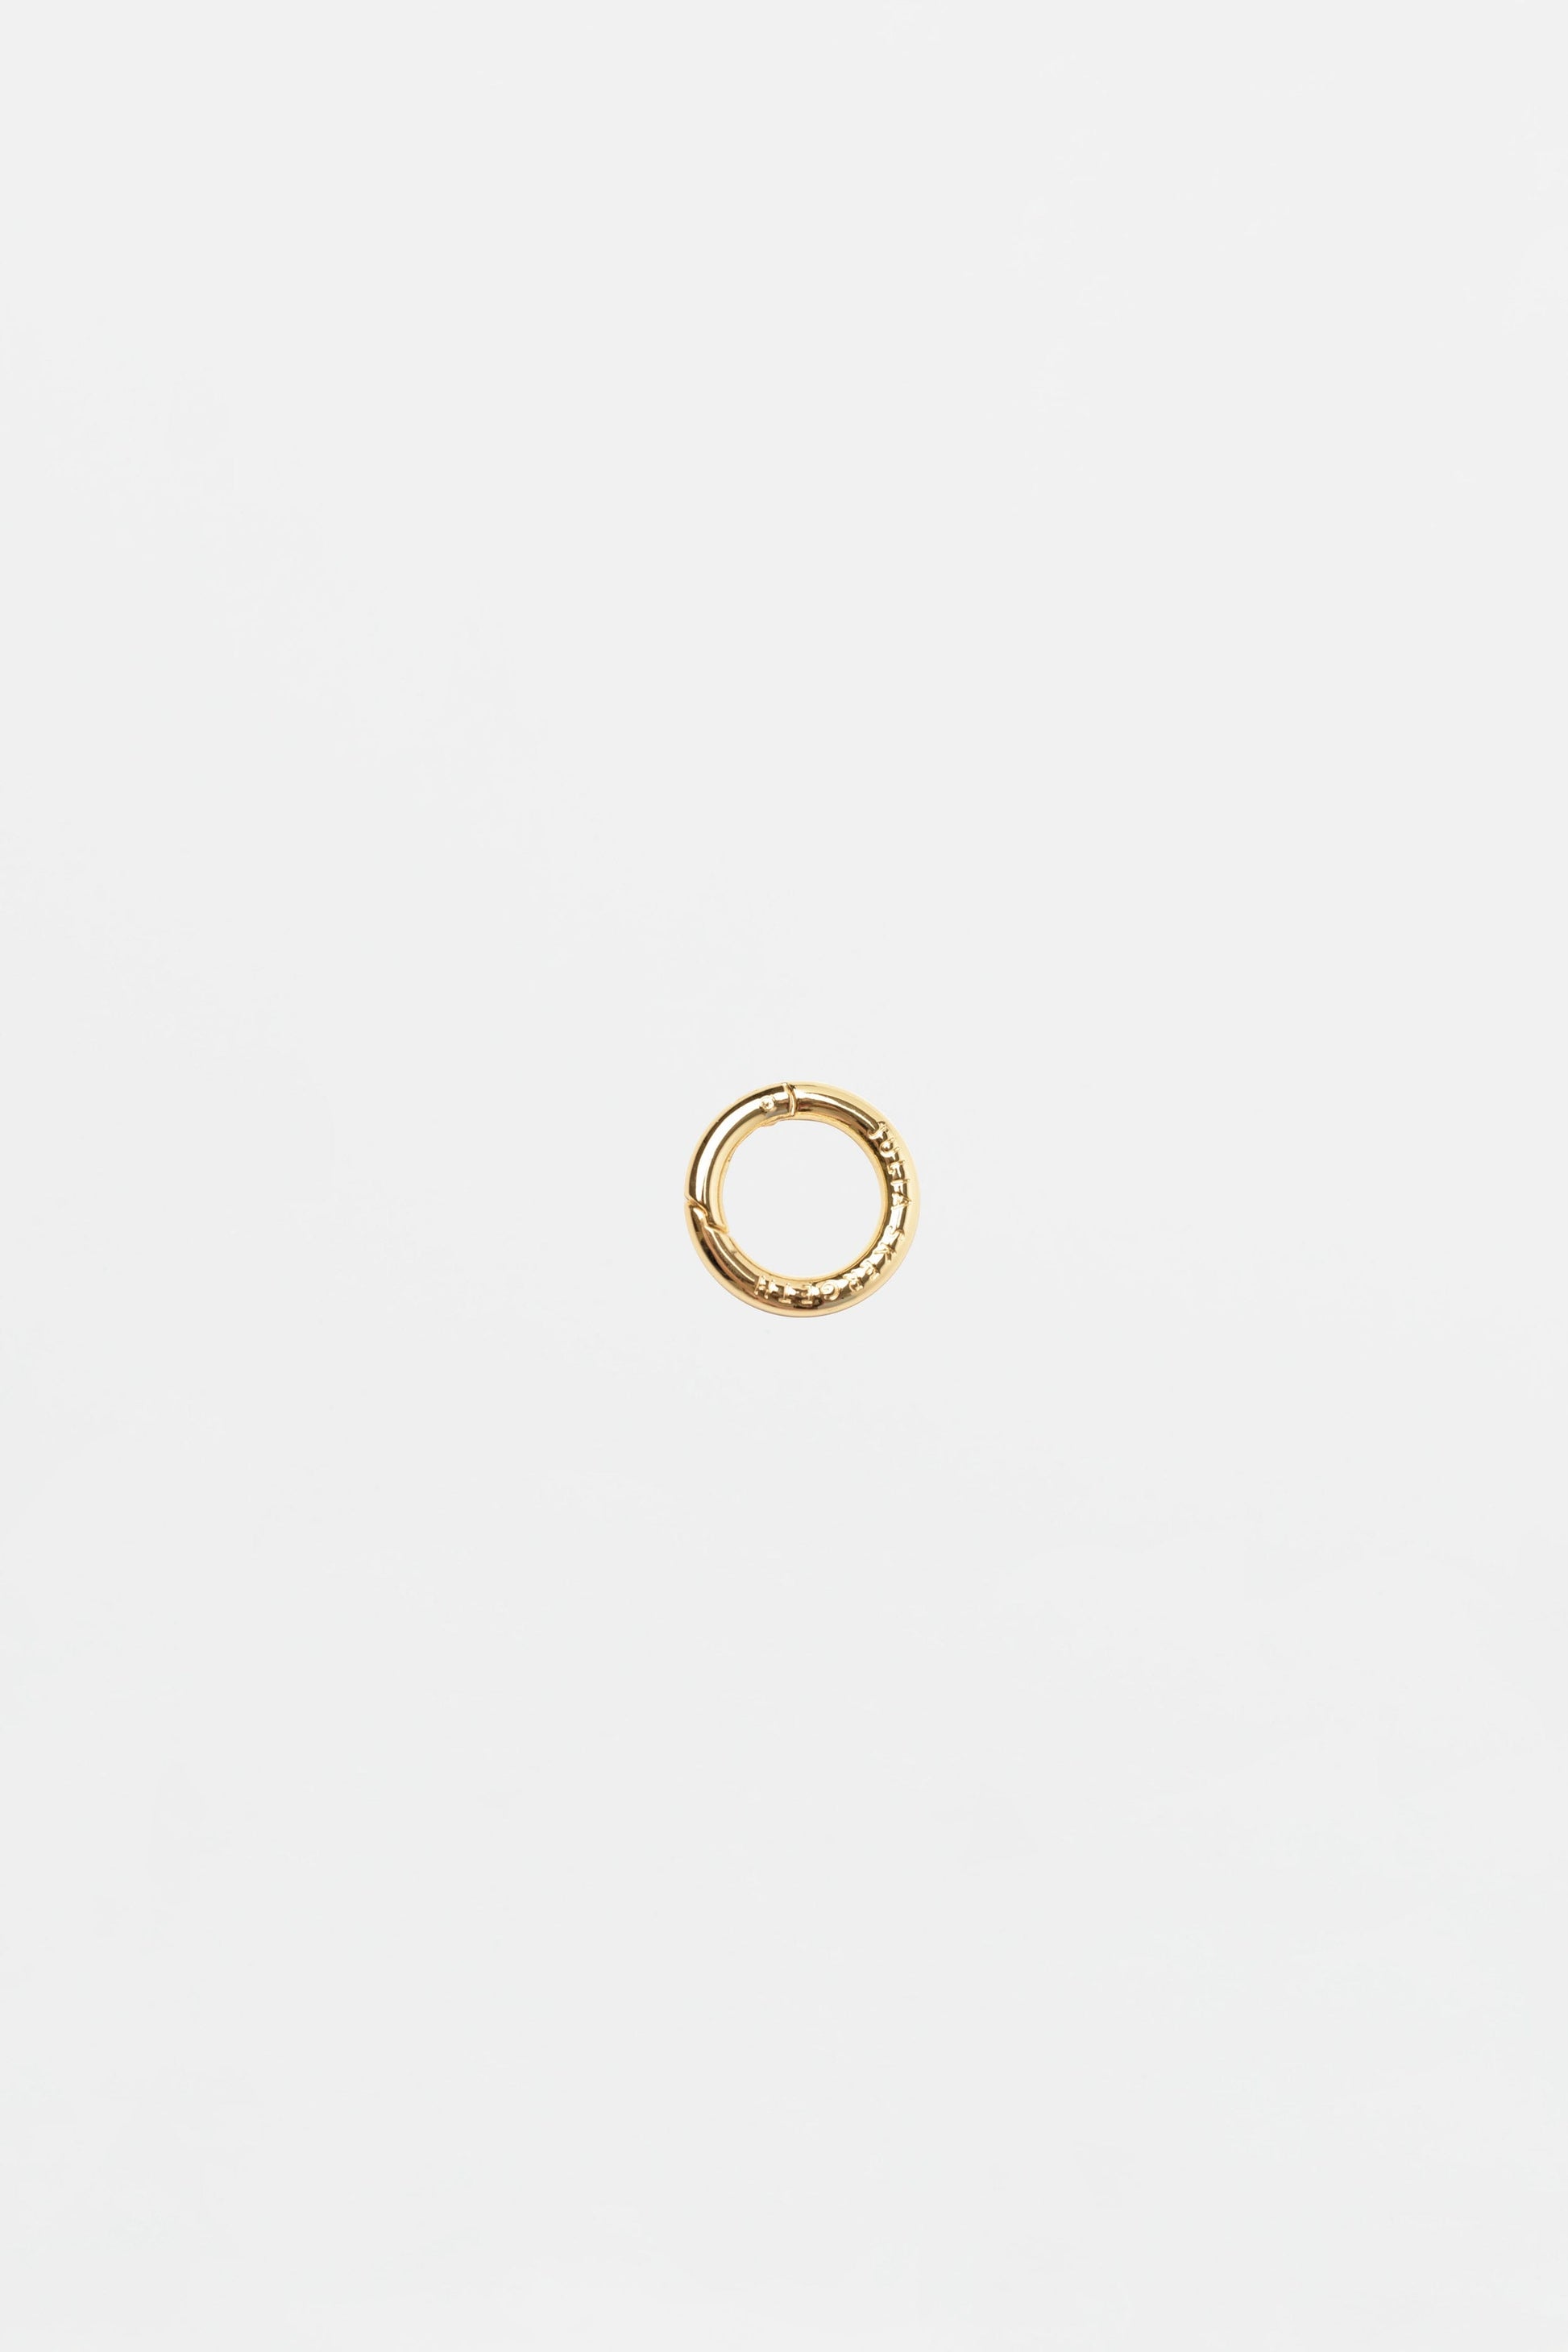 The Clip-On Ring Gold - JULIA SKERGETH